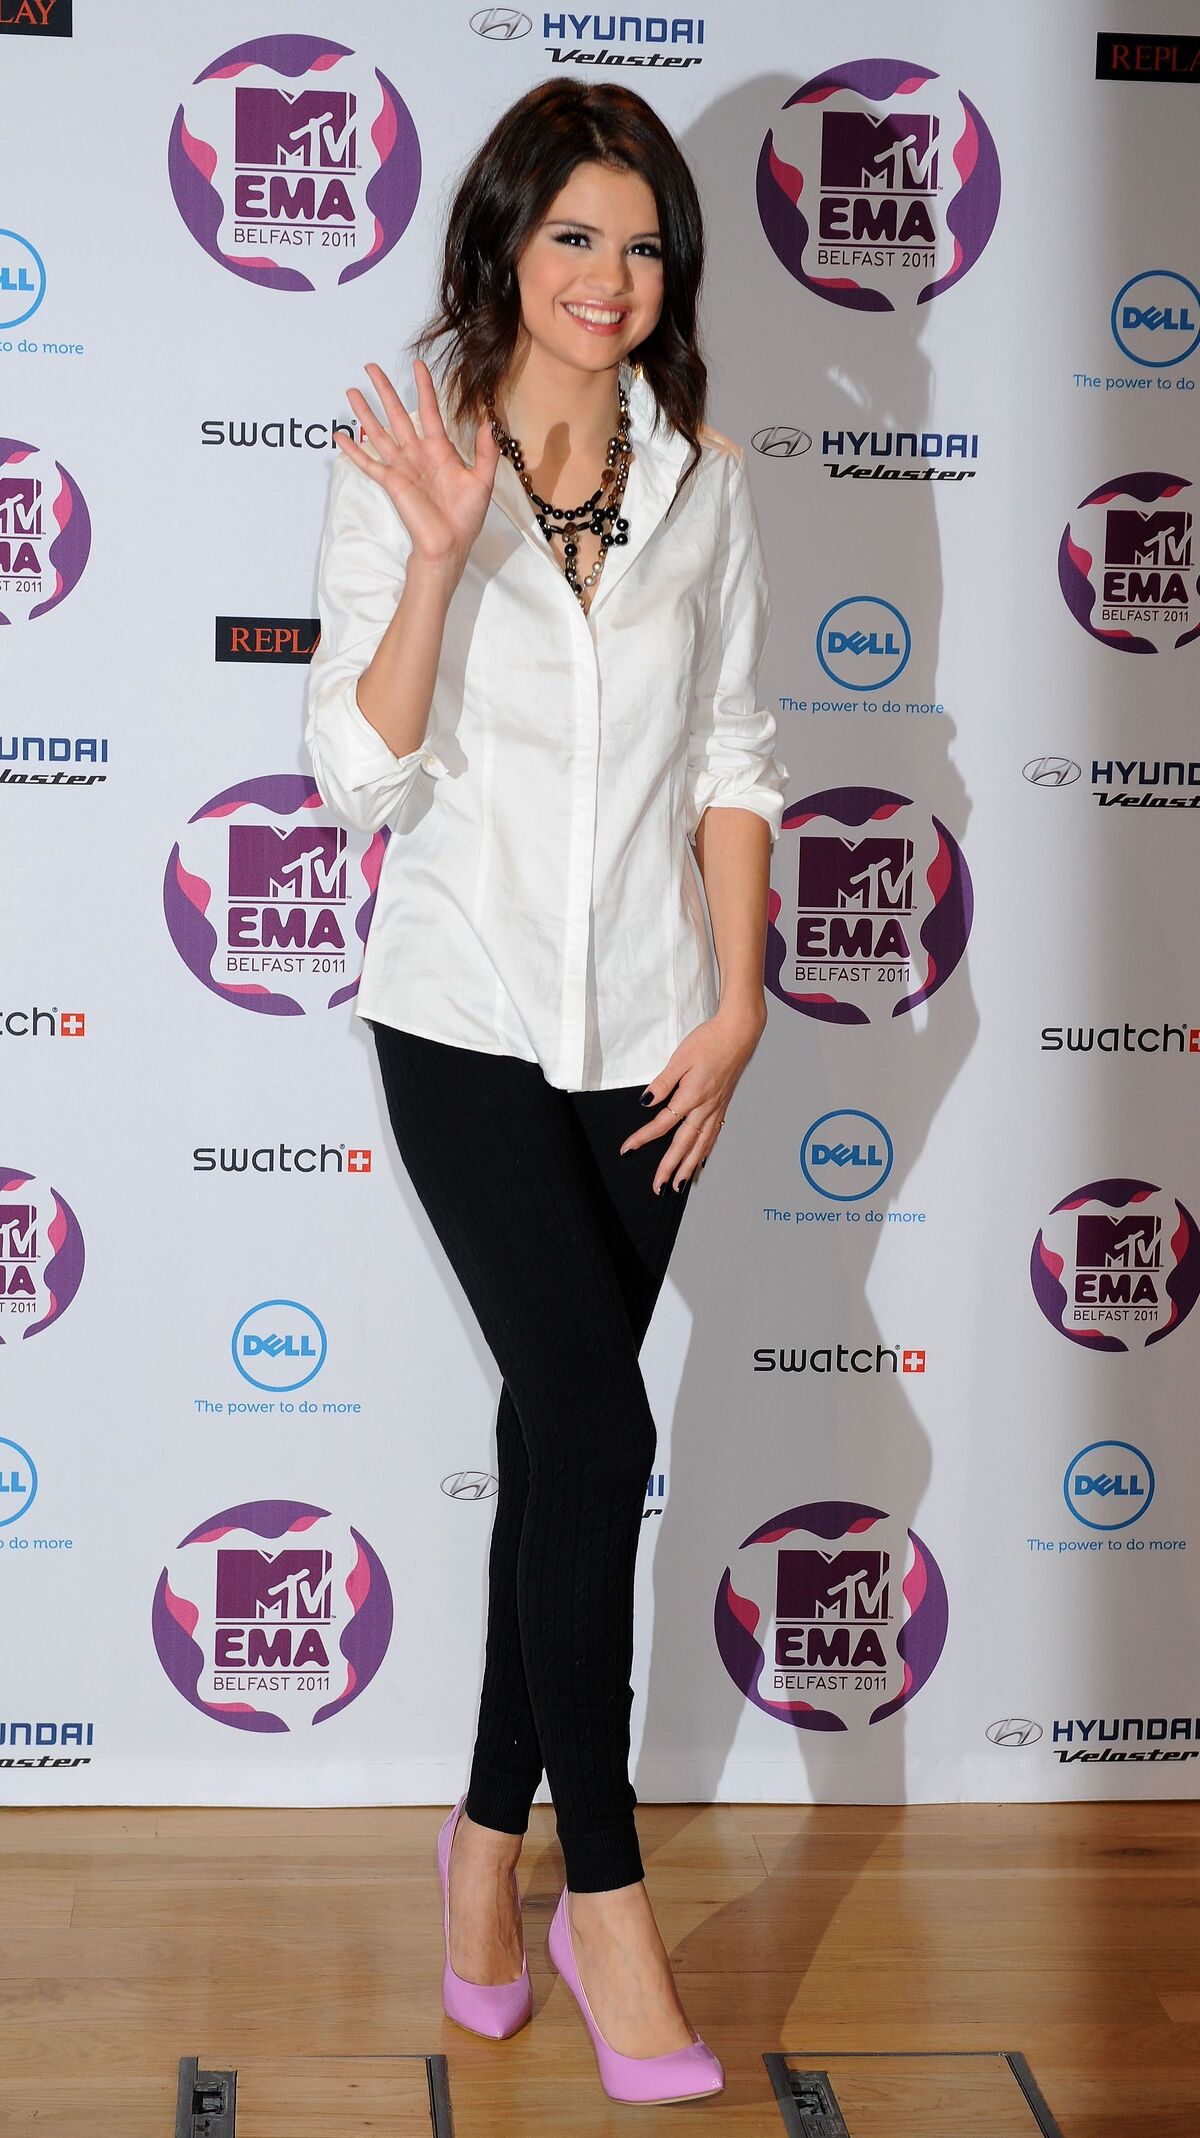 MTV EMA Press Conference in Belfast 2011 | Selena Gomez Wiki | Fandom